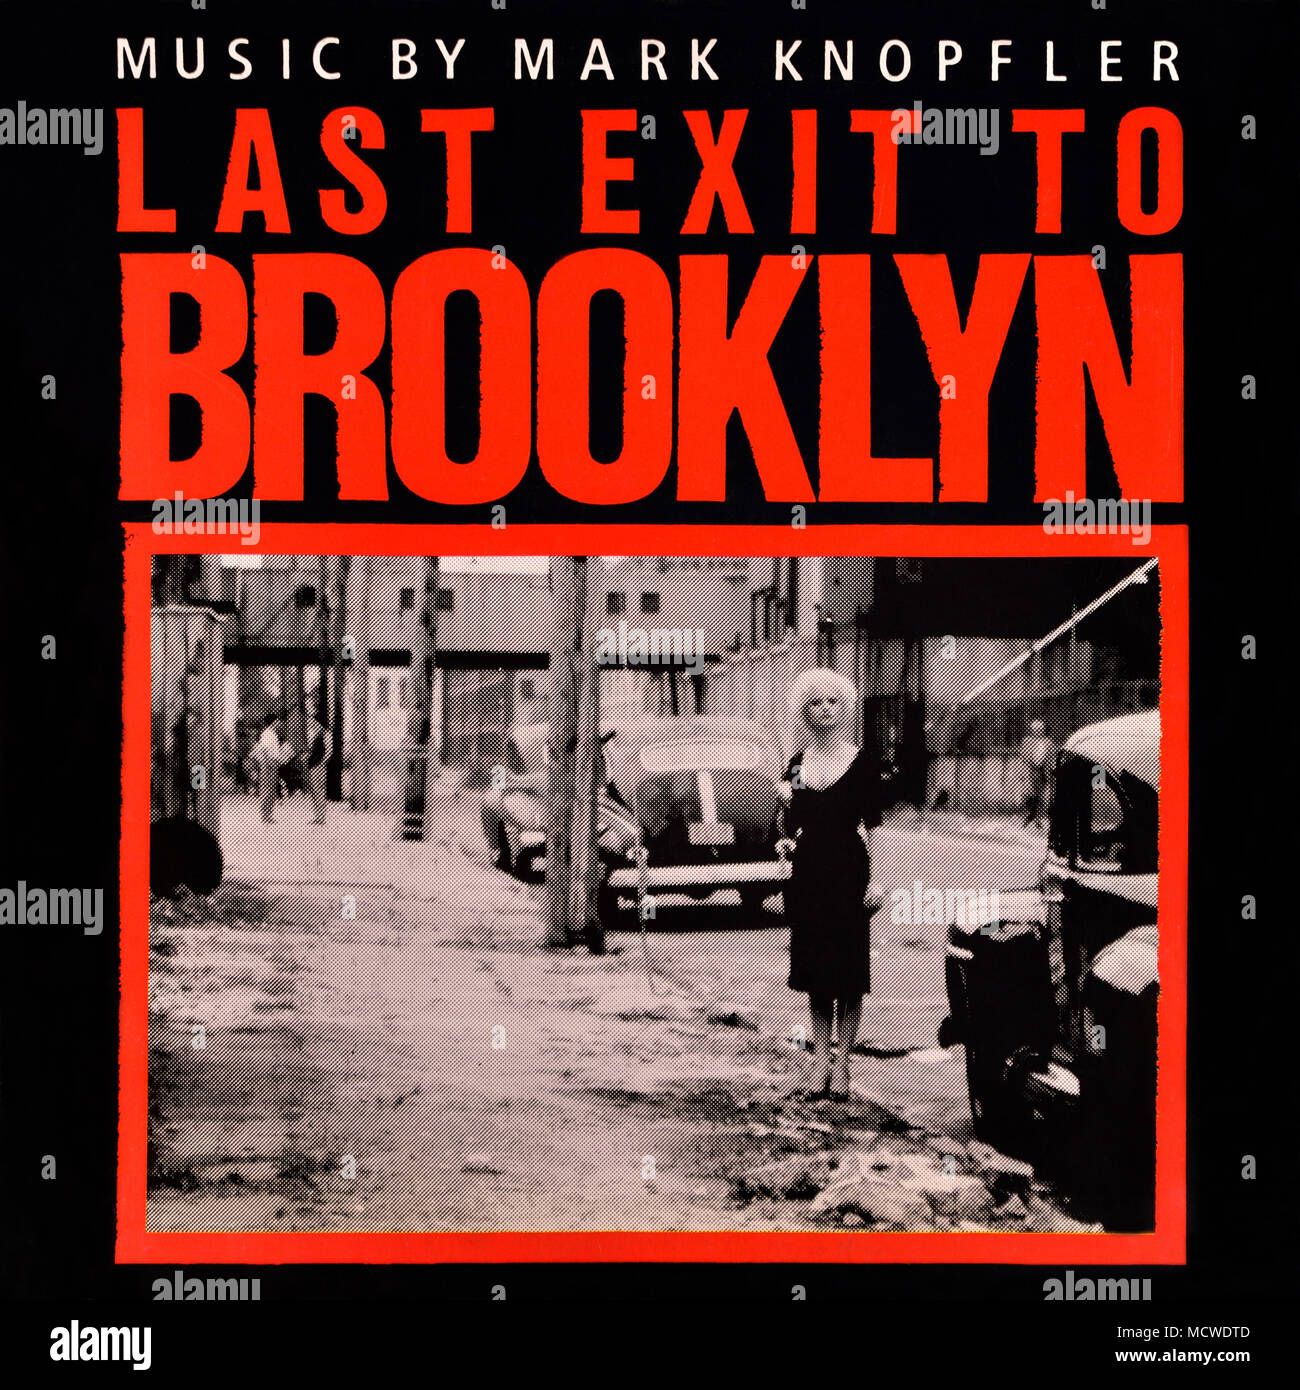 Mark Knopfler - original vinyl album cover - Last Exit To Brooklyn - 1989 Stock Photo